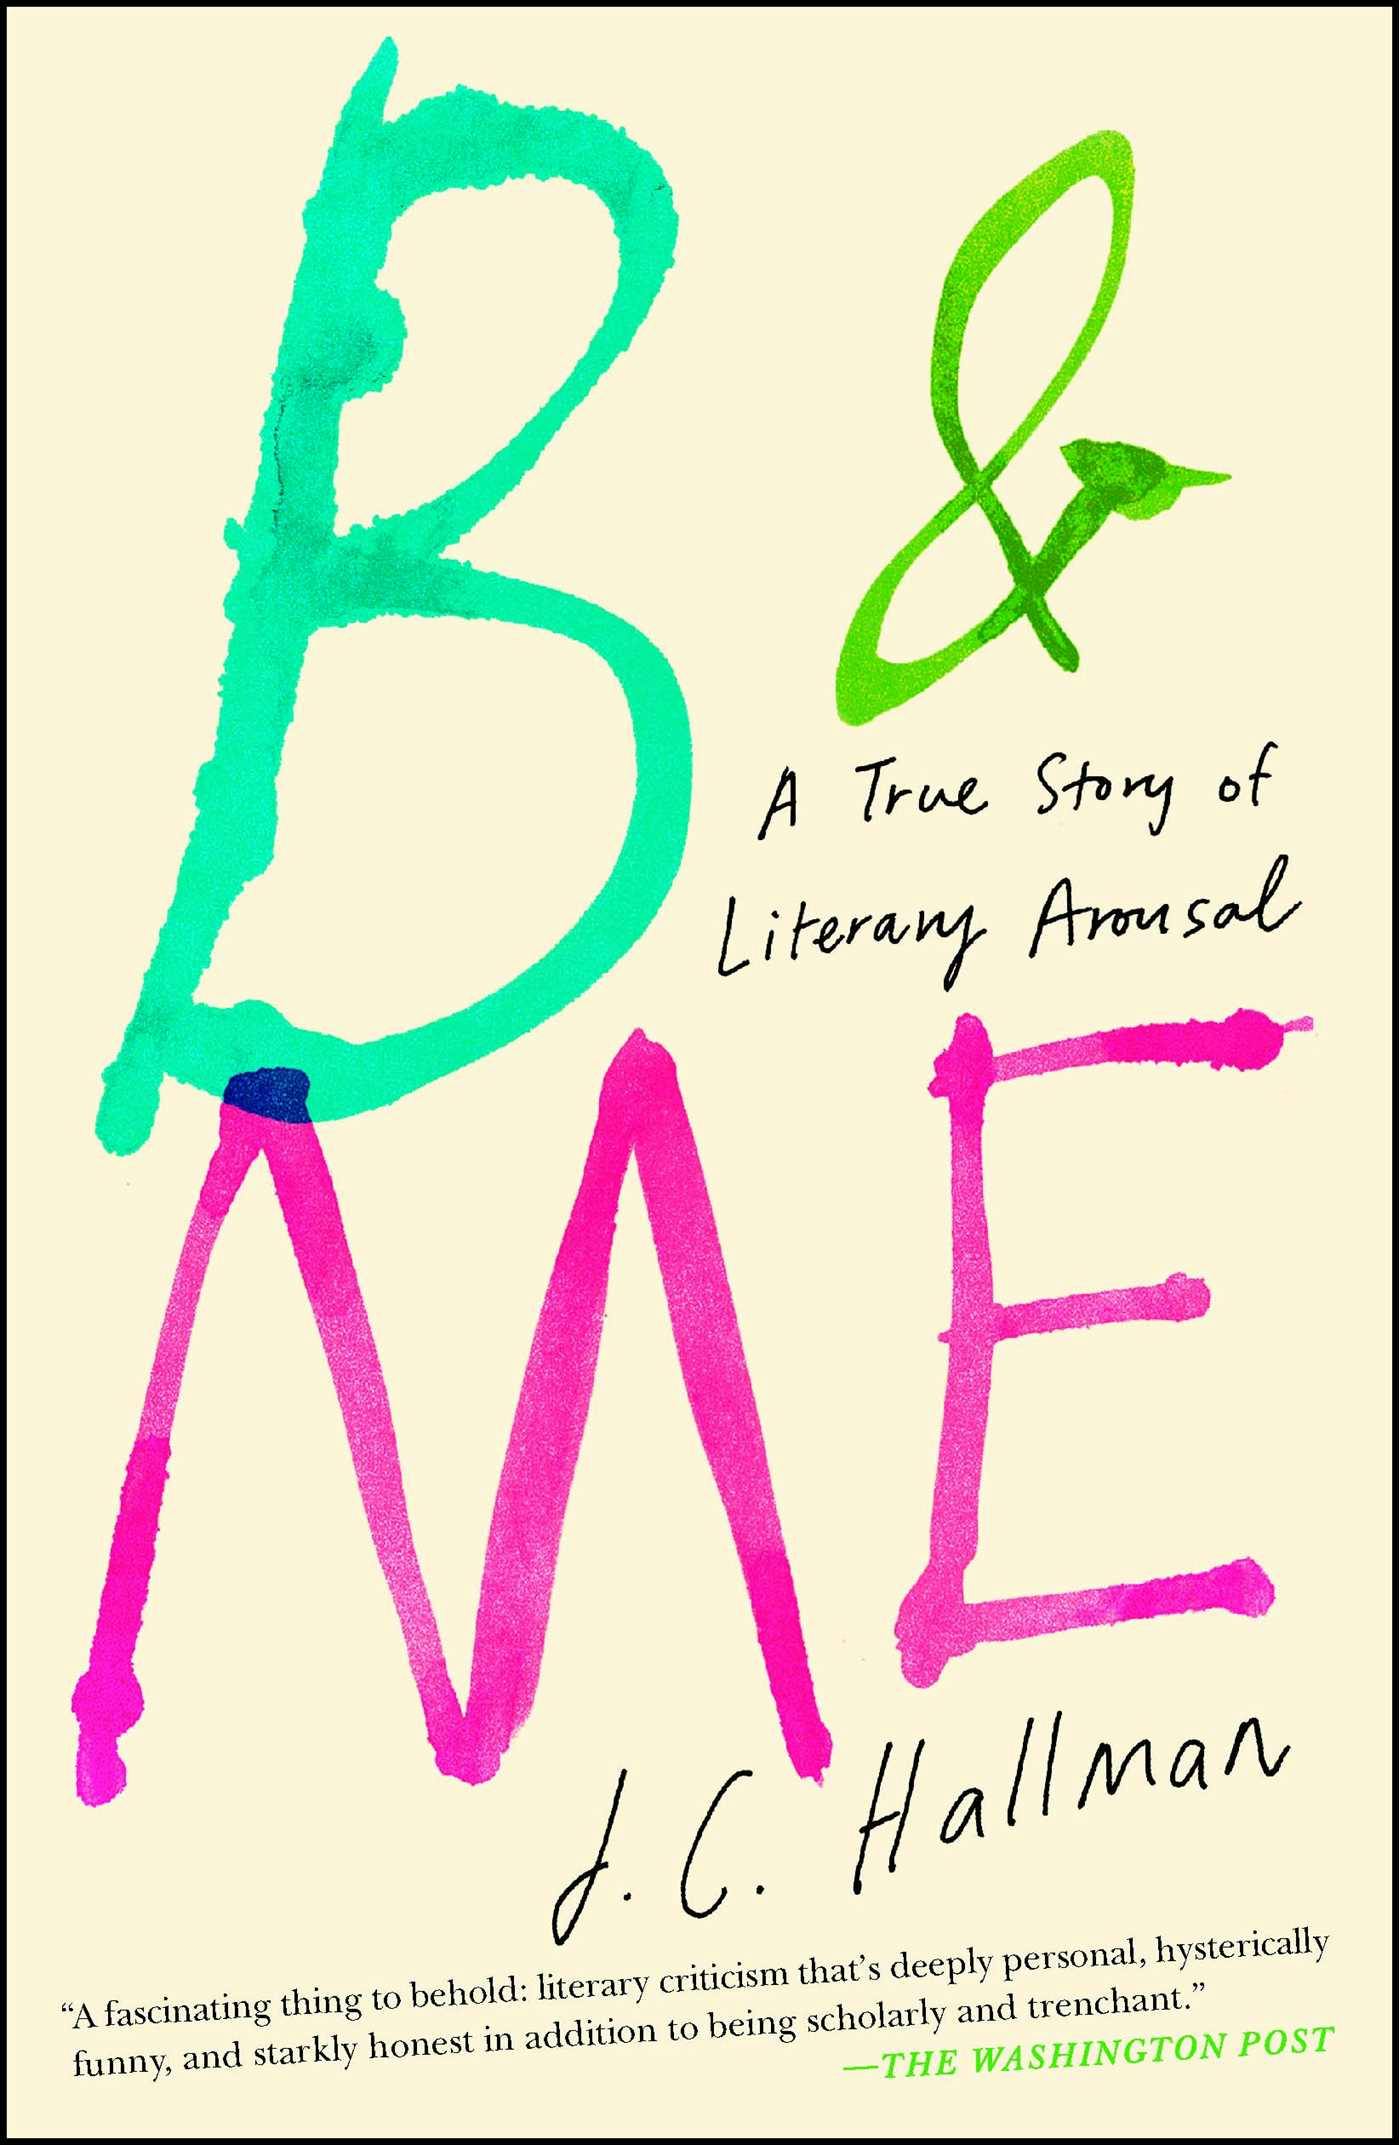 B & Me: A True Story of Literary Arousal - J.C. Hallman